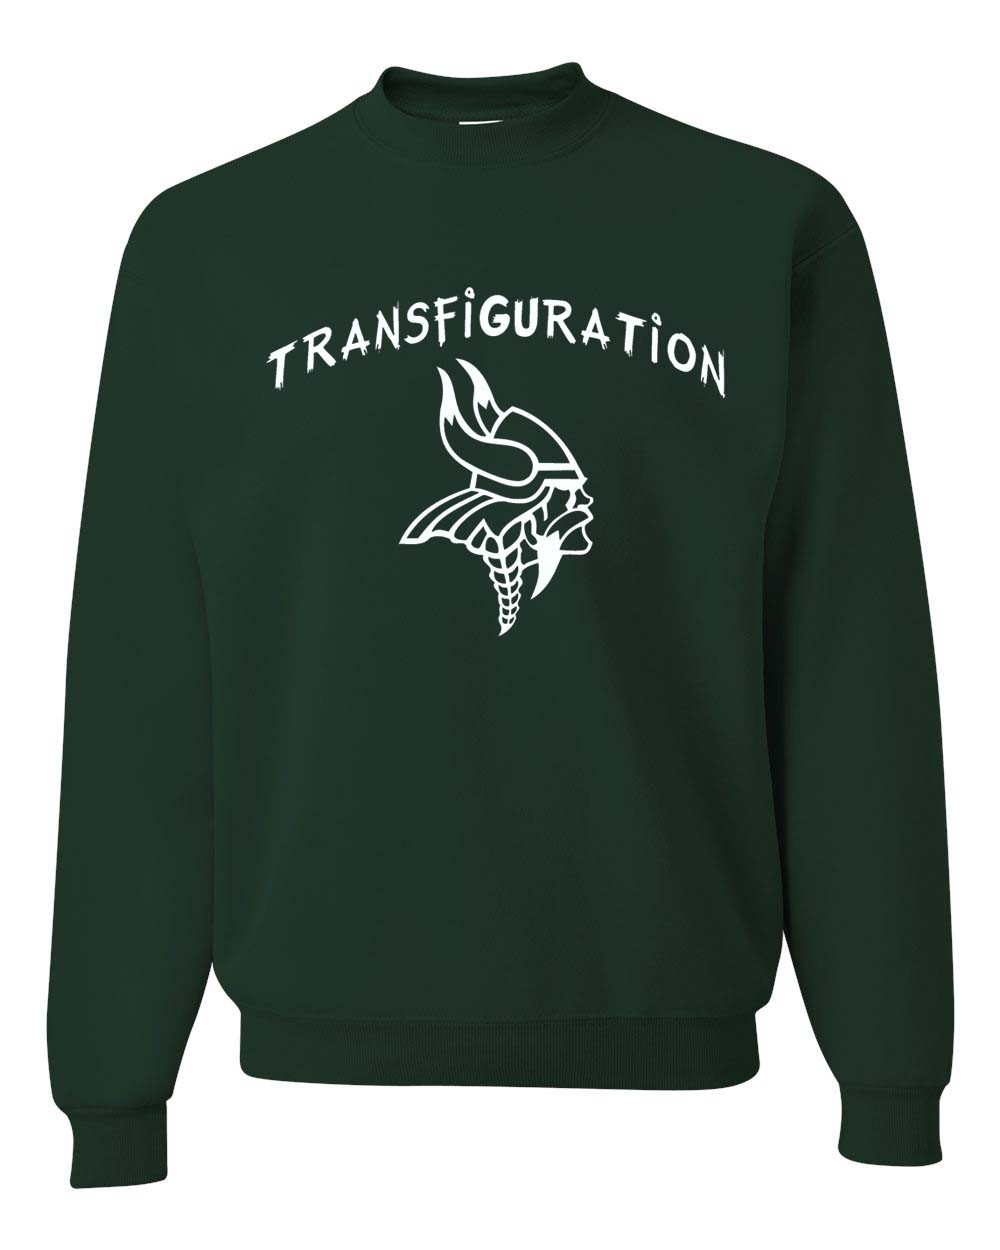 Transfiguration Gym Sweatshirt w/ School Logo *sale price in stock only